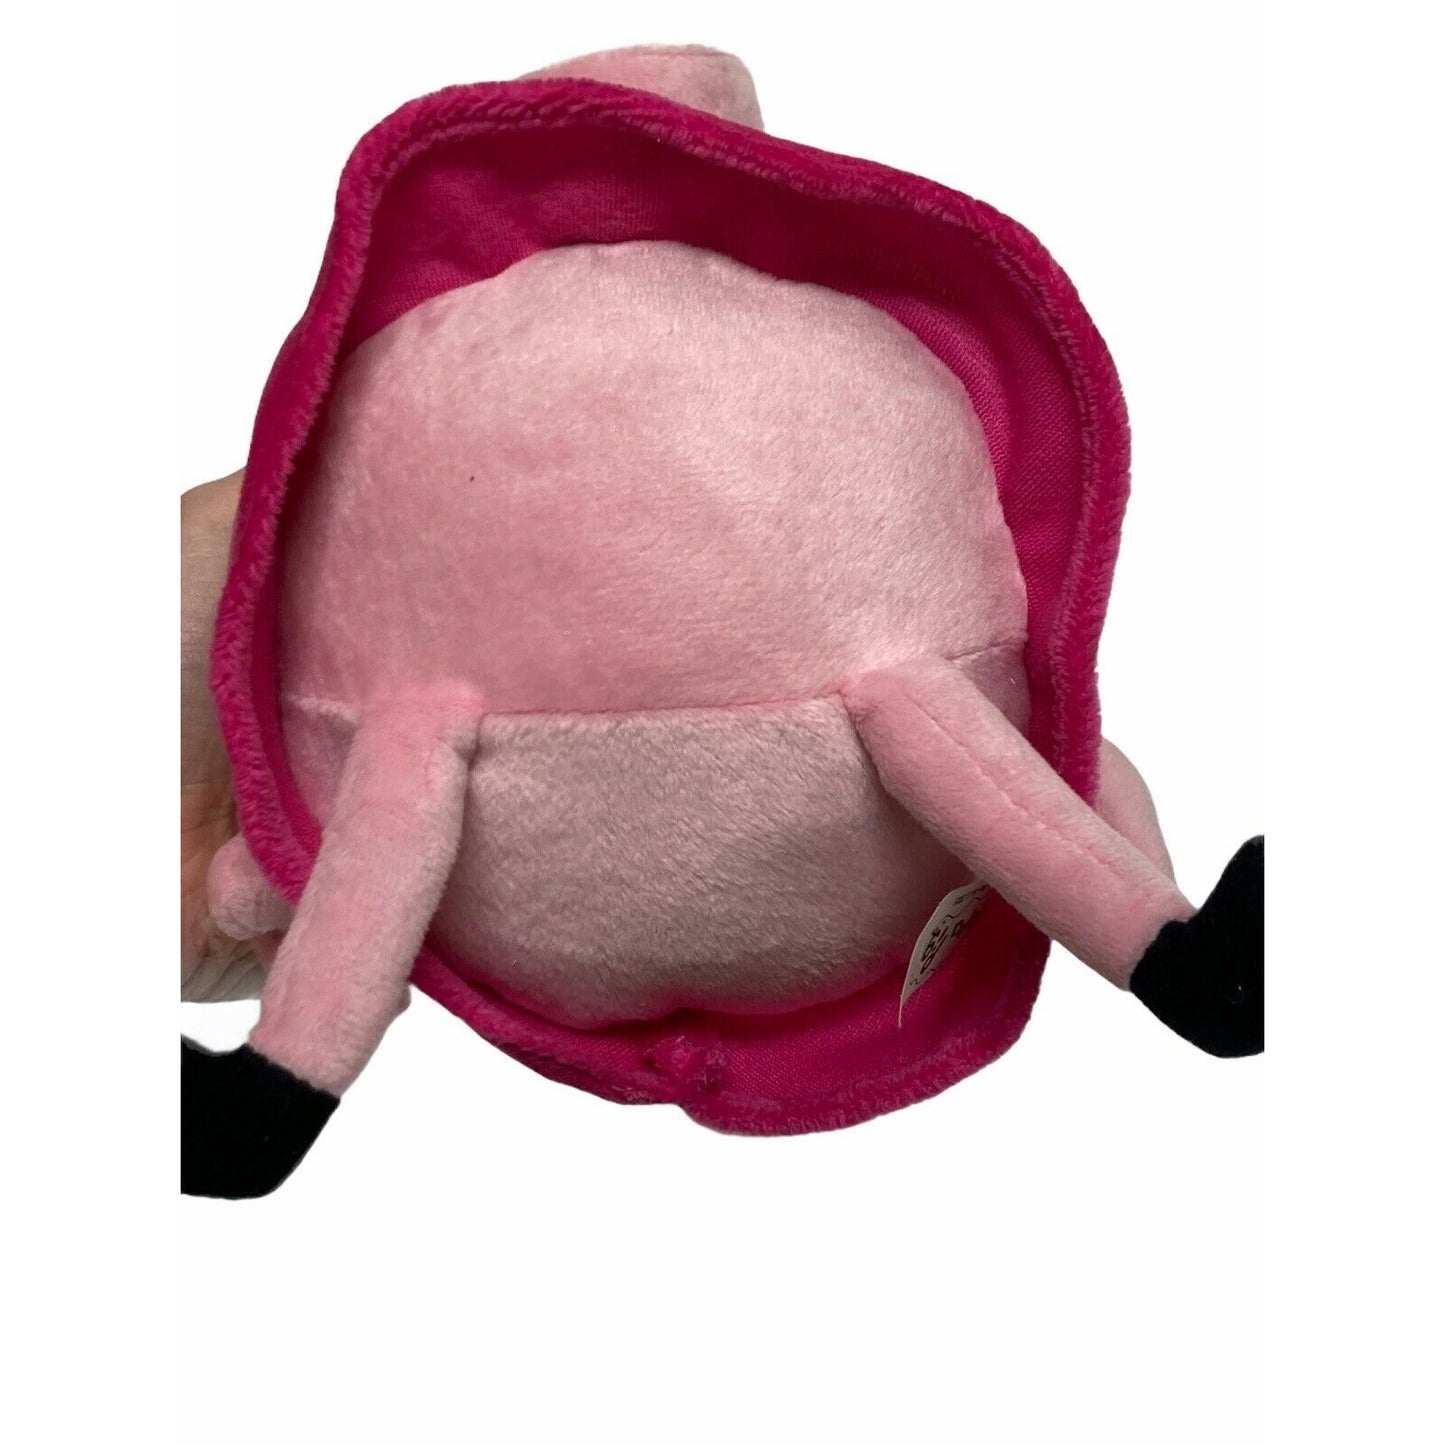 Peppa Pig Princess N' Oink Talking Peppa Stuffed Plush Toy Plushie Works 14”